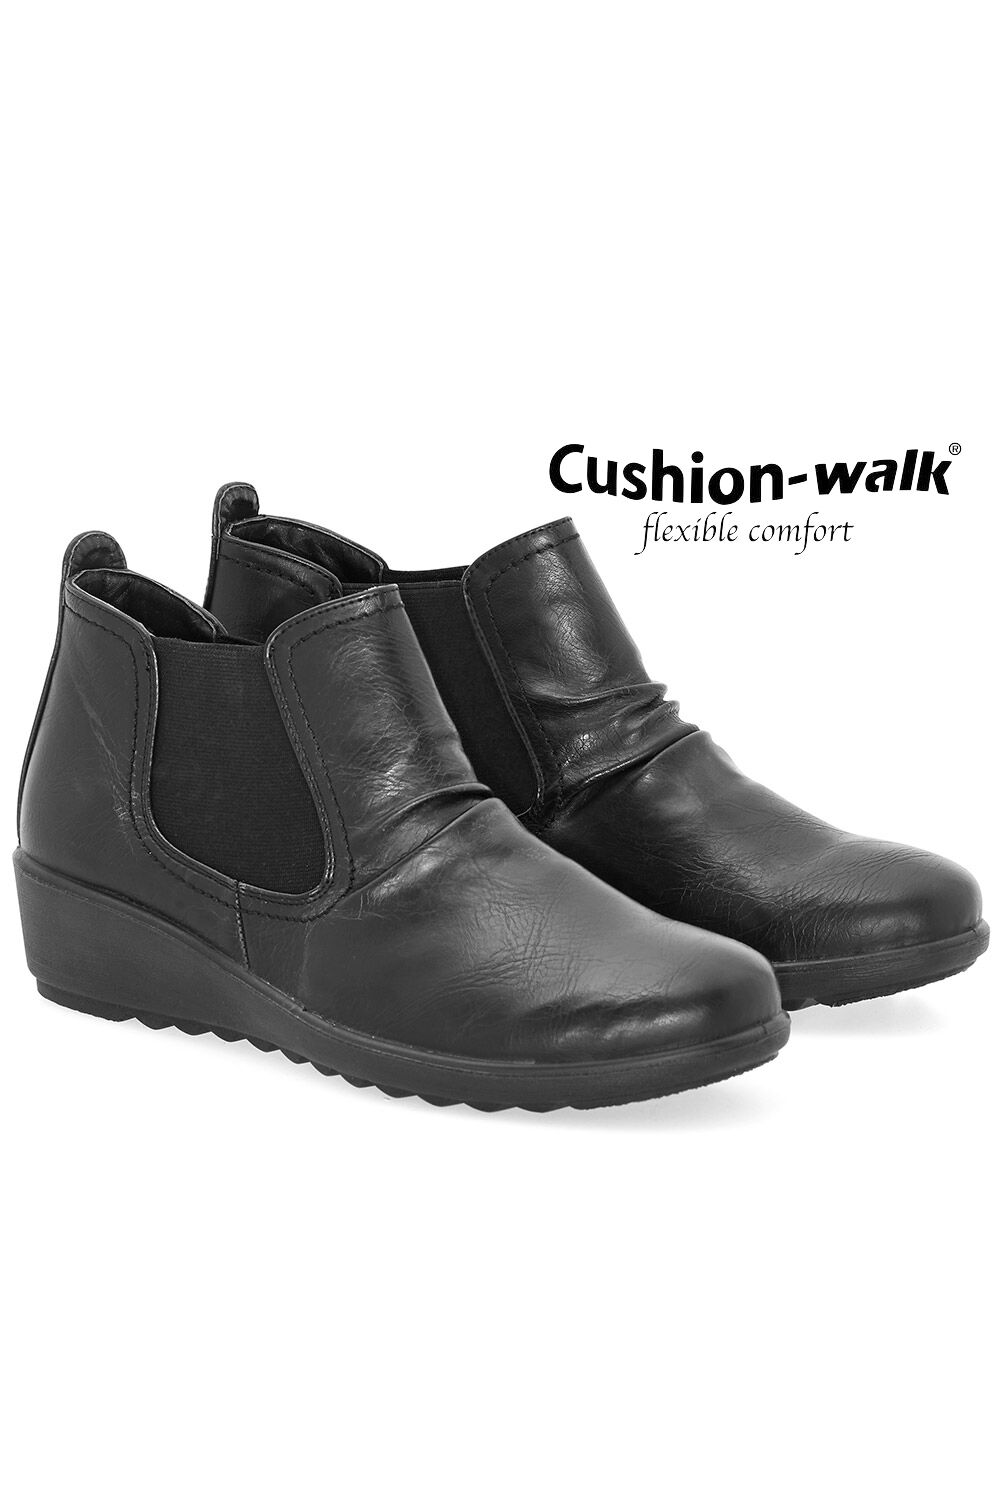 cushion walk black boots